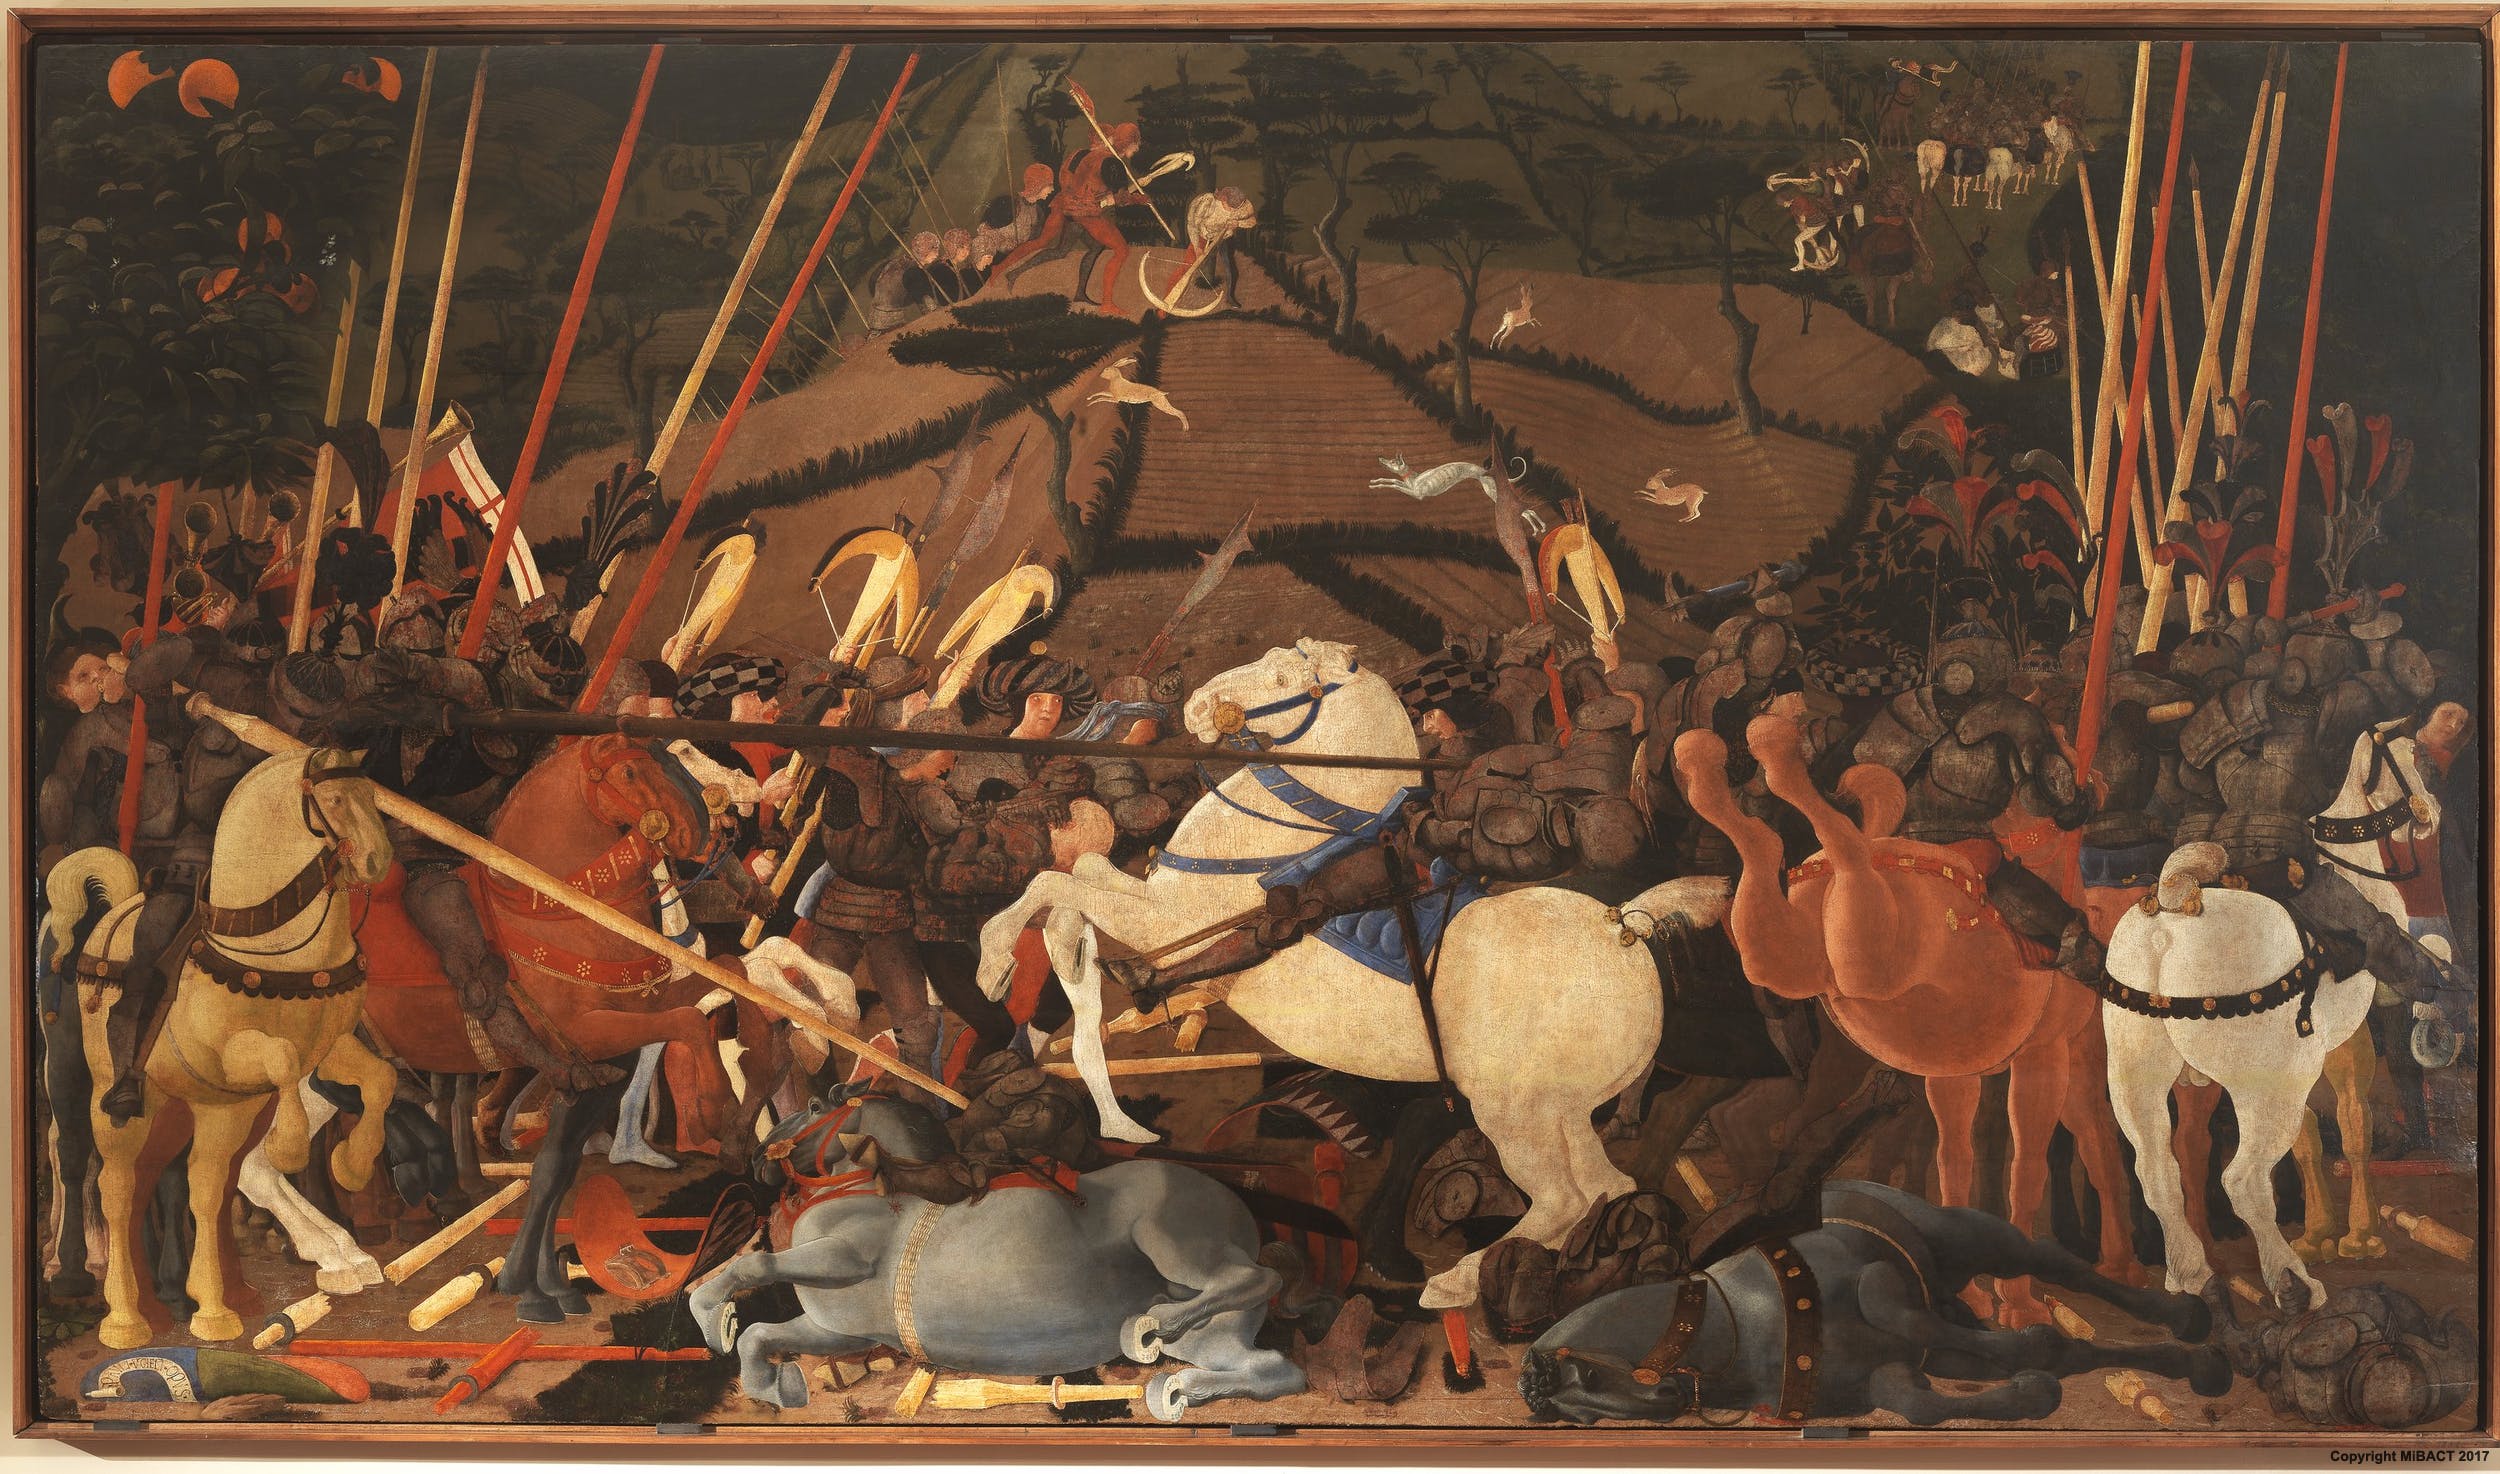 Paolo Uccello, The Battle of San Romano, The Unseating of Bernardino della Carda (c. 1438-1440; tempera on panel, 182 x 323 cm; Florence, Uffizi Galleries)